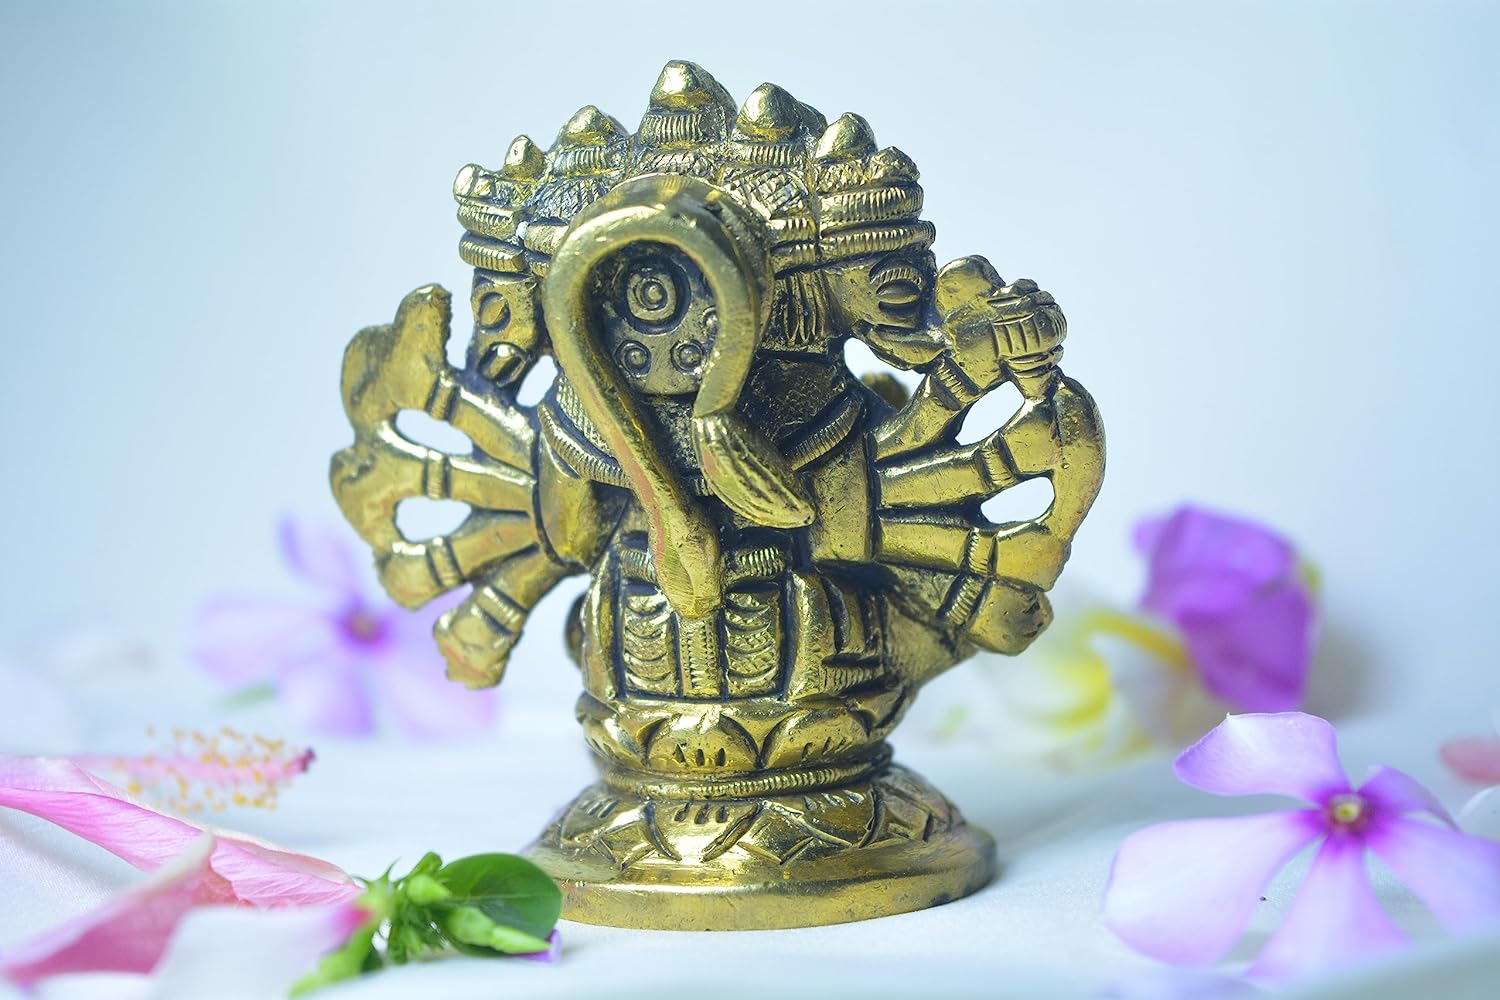 Brass Hanuman Statue Murti Idol 2.25 inch (130 Gram) Brass Lord Bajrangbali Sculpture Decorative Worship Hindu Gods for Home Decor Deity Idol Gift | Anjaneya Pavanputra Maruti Figurine for worship